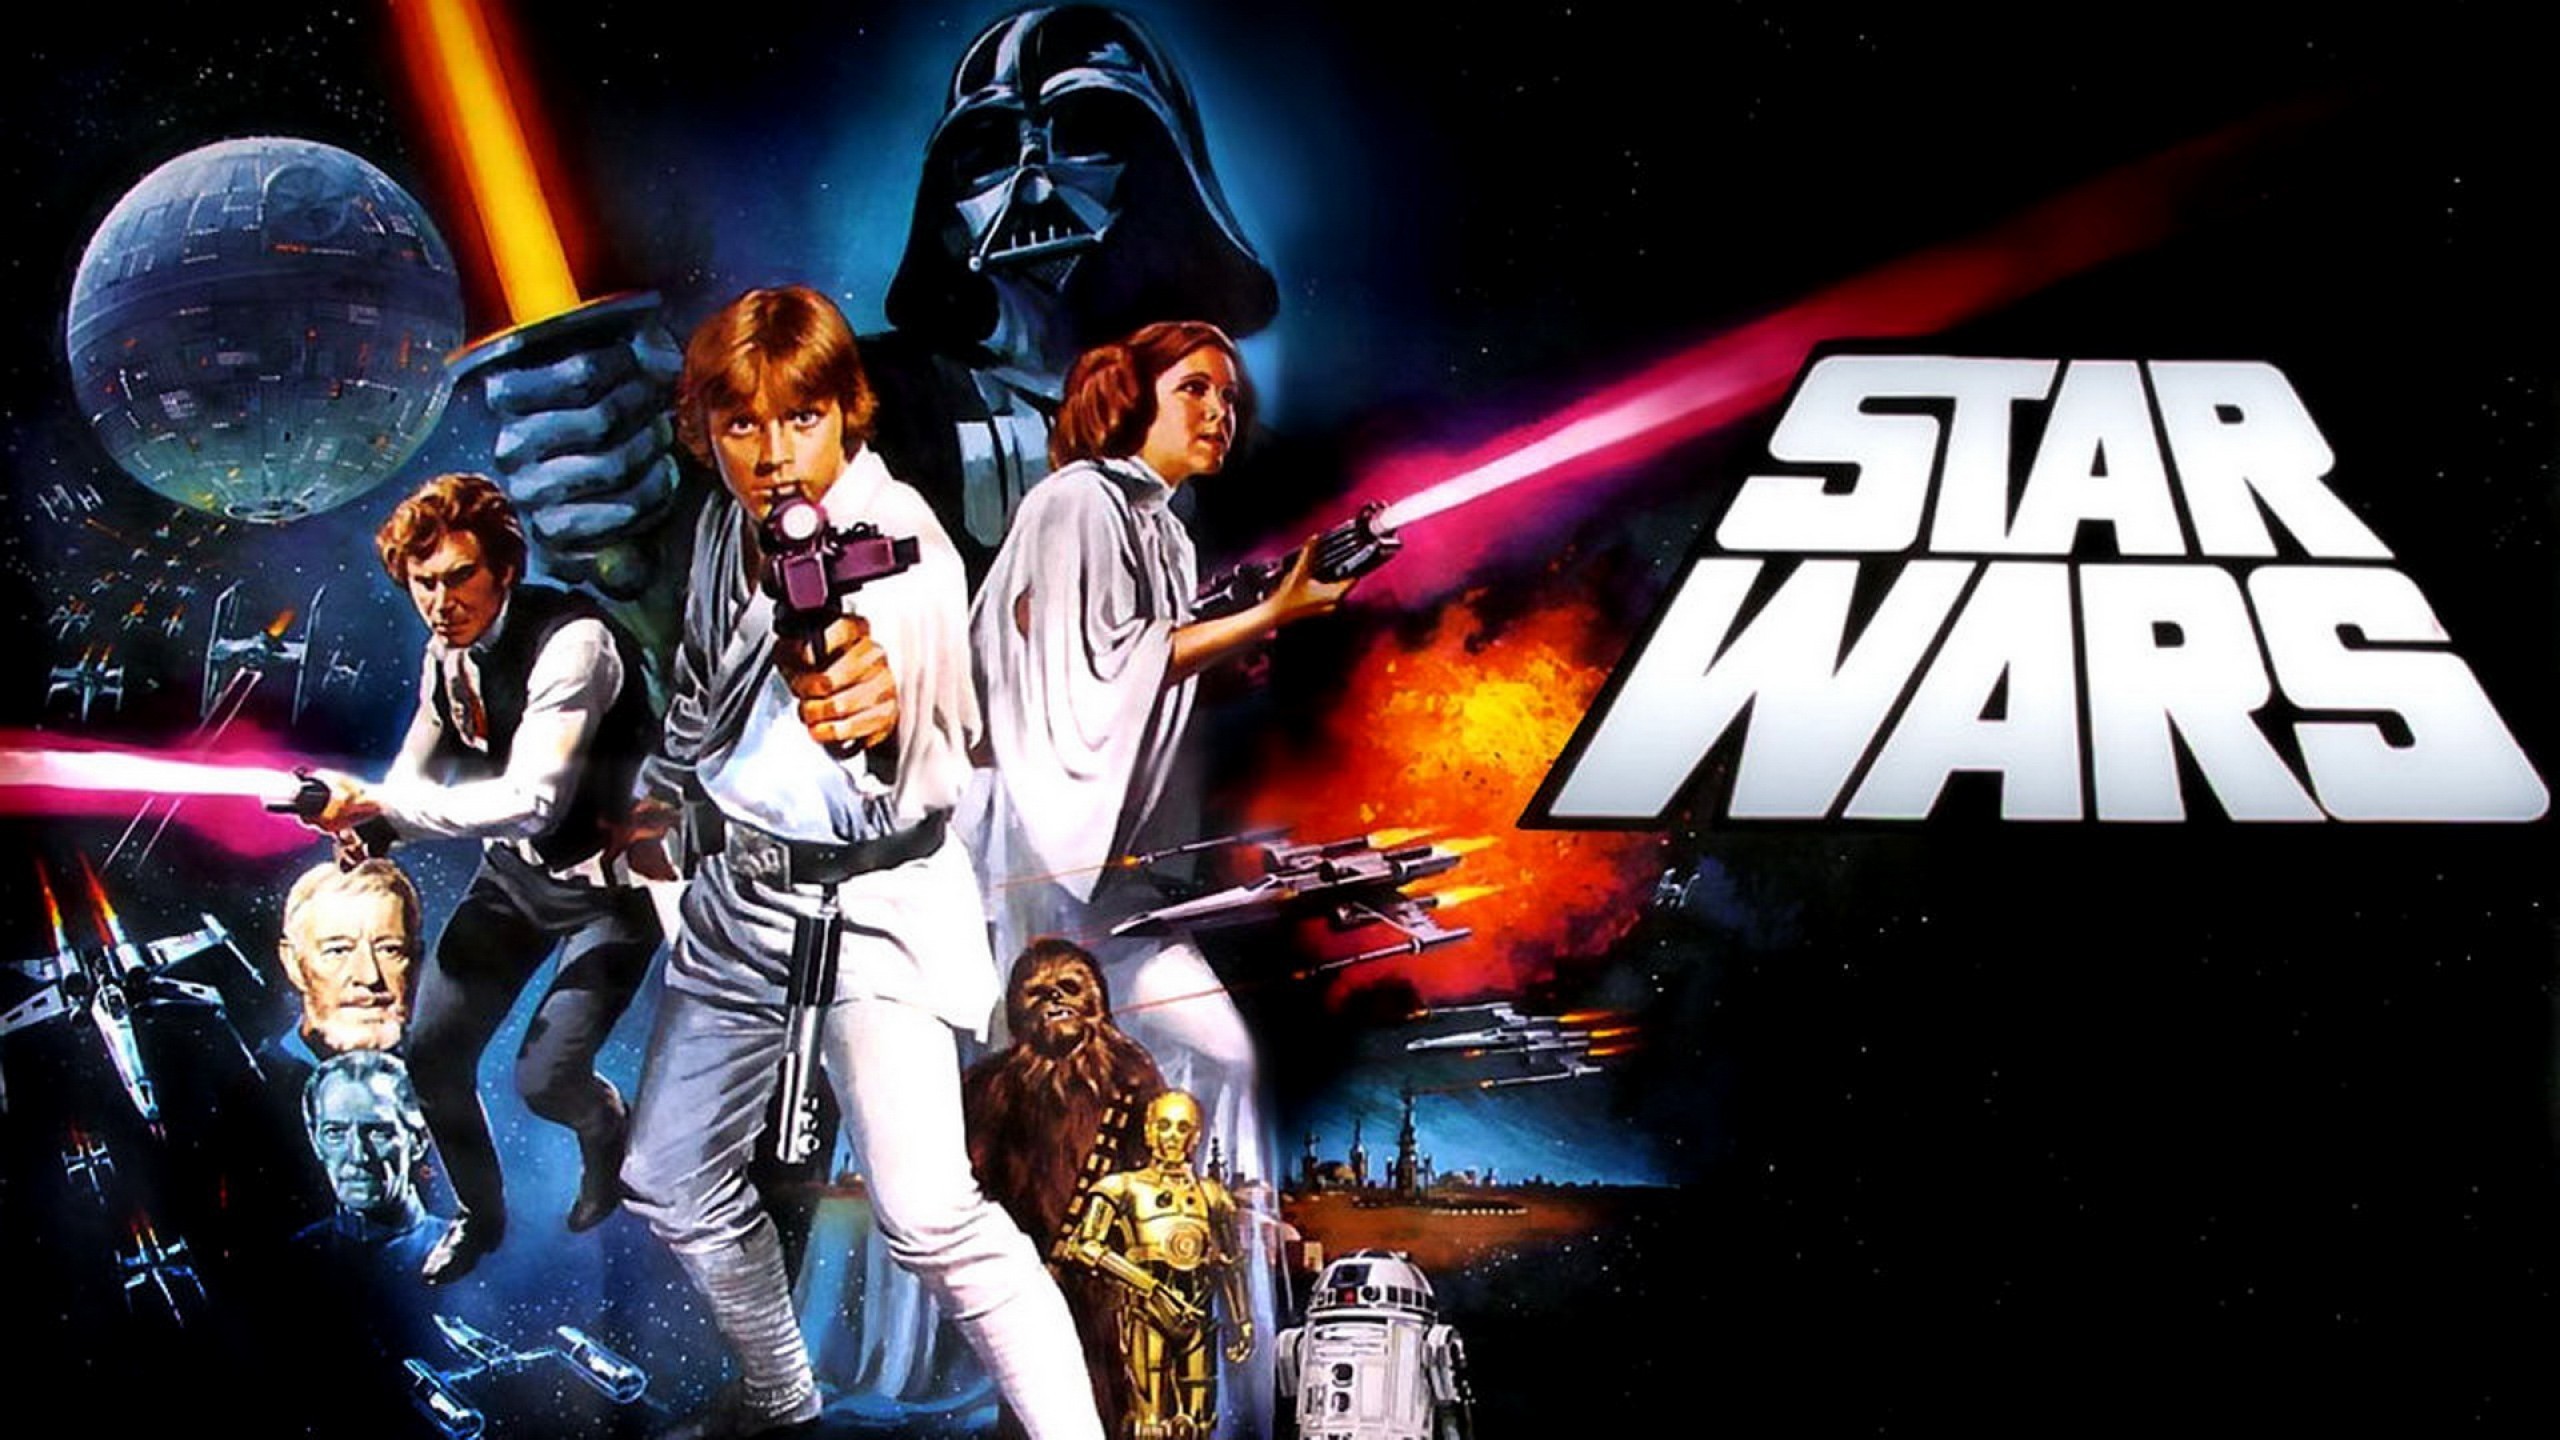 Star Wars Episode Iv Caracters Harrison Ford Darth Vader Carrie Fisher Luke Skywalker Chewbacca Wallpaper Hd 2560 1440 2560x1440